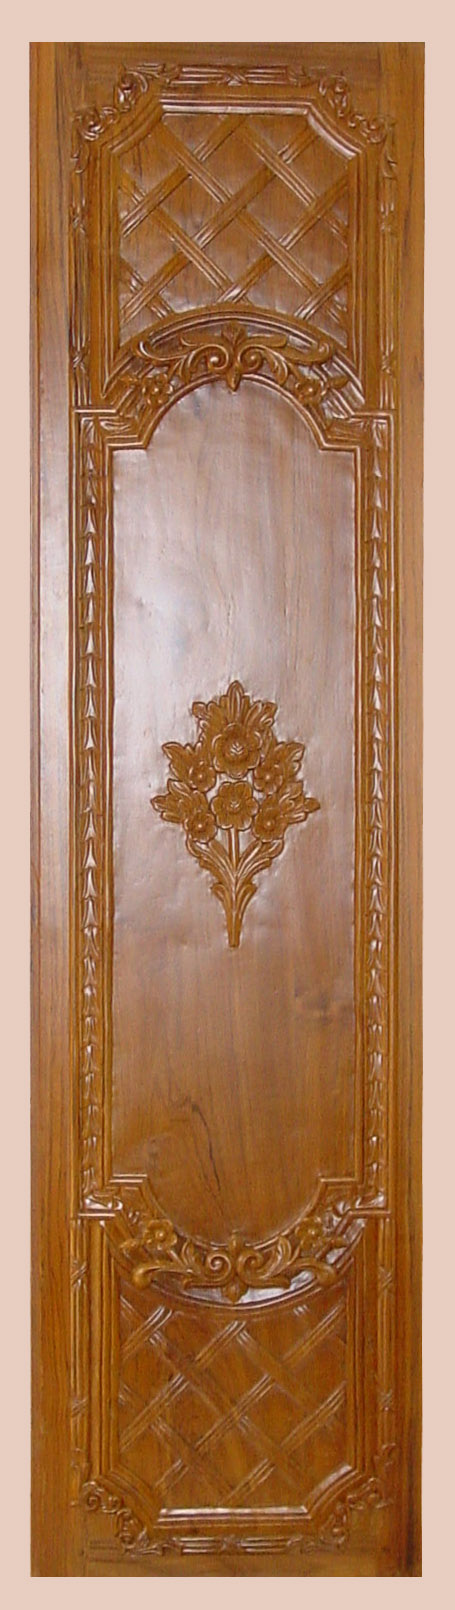 Baroque Mesh Panel